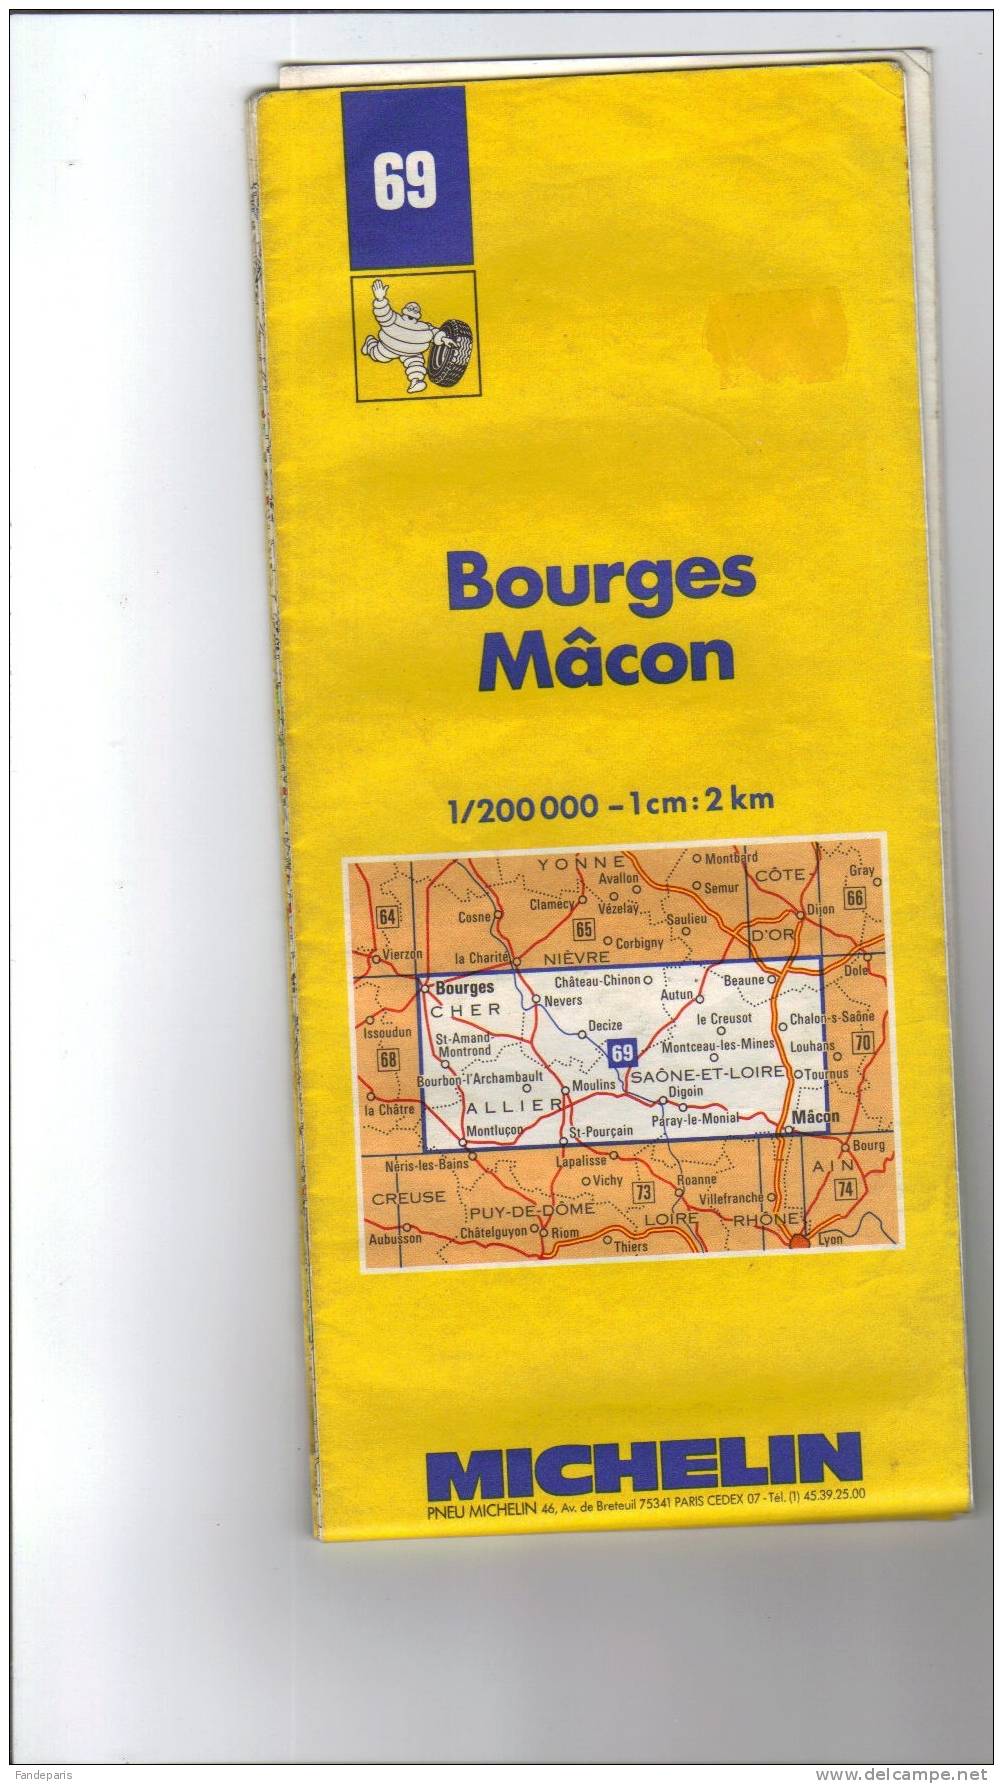 CARTES ROUTIERES  // FRANCE  //   BOURGES - MACON  / MICHELIN  / N° 69 - Cartes Routières